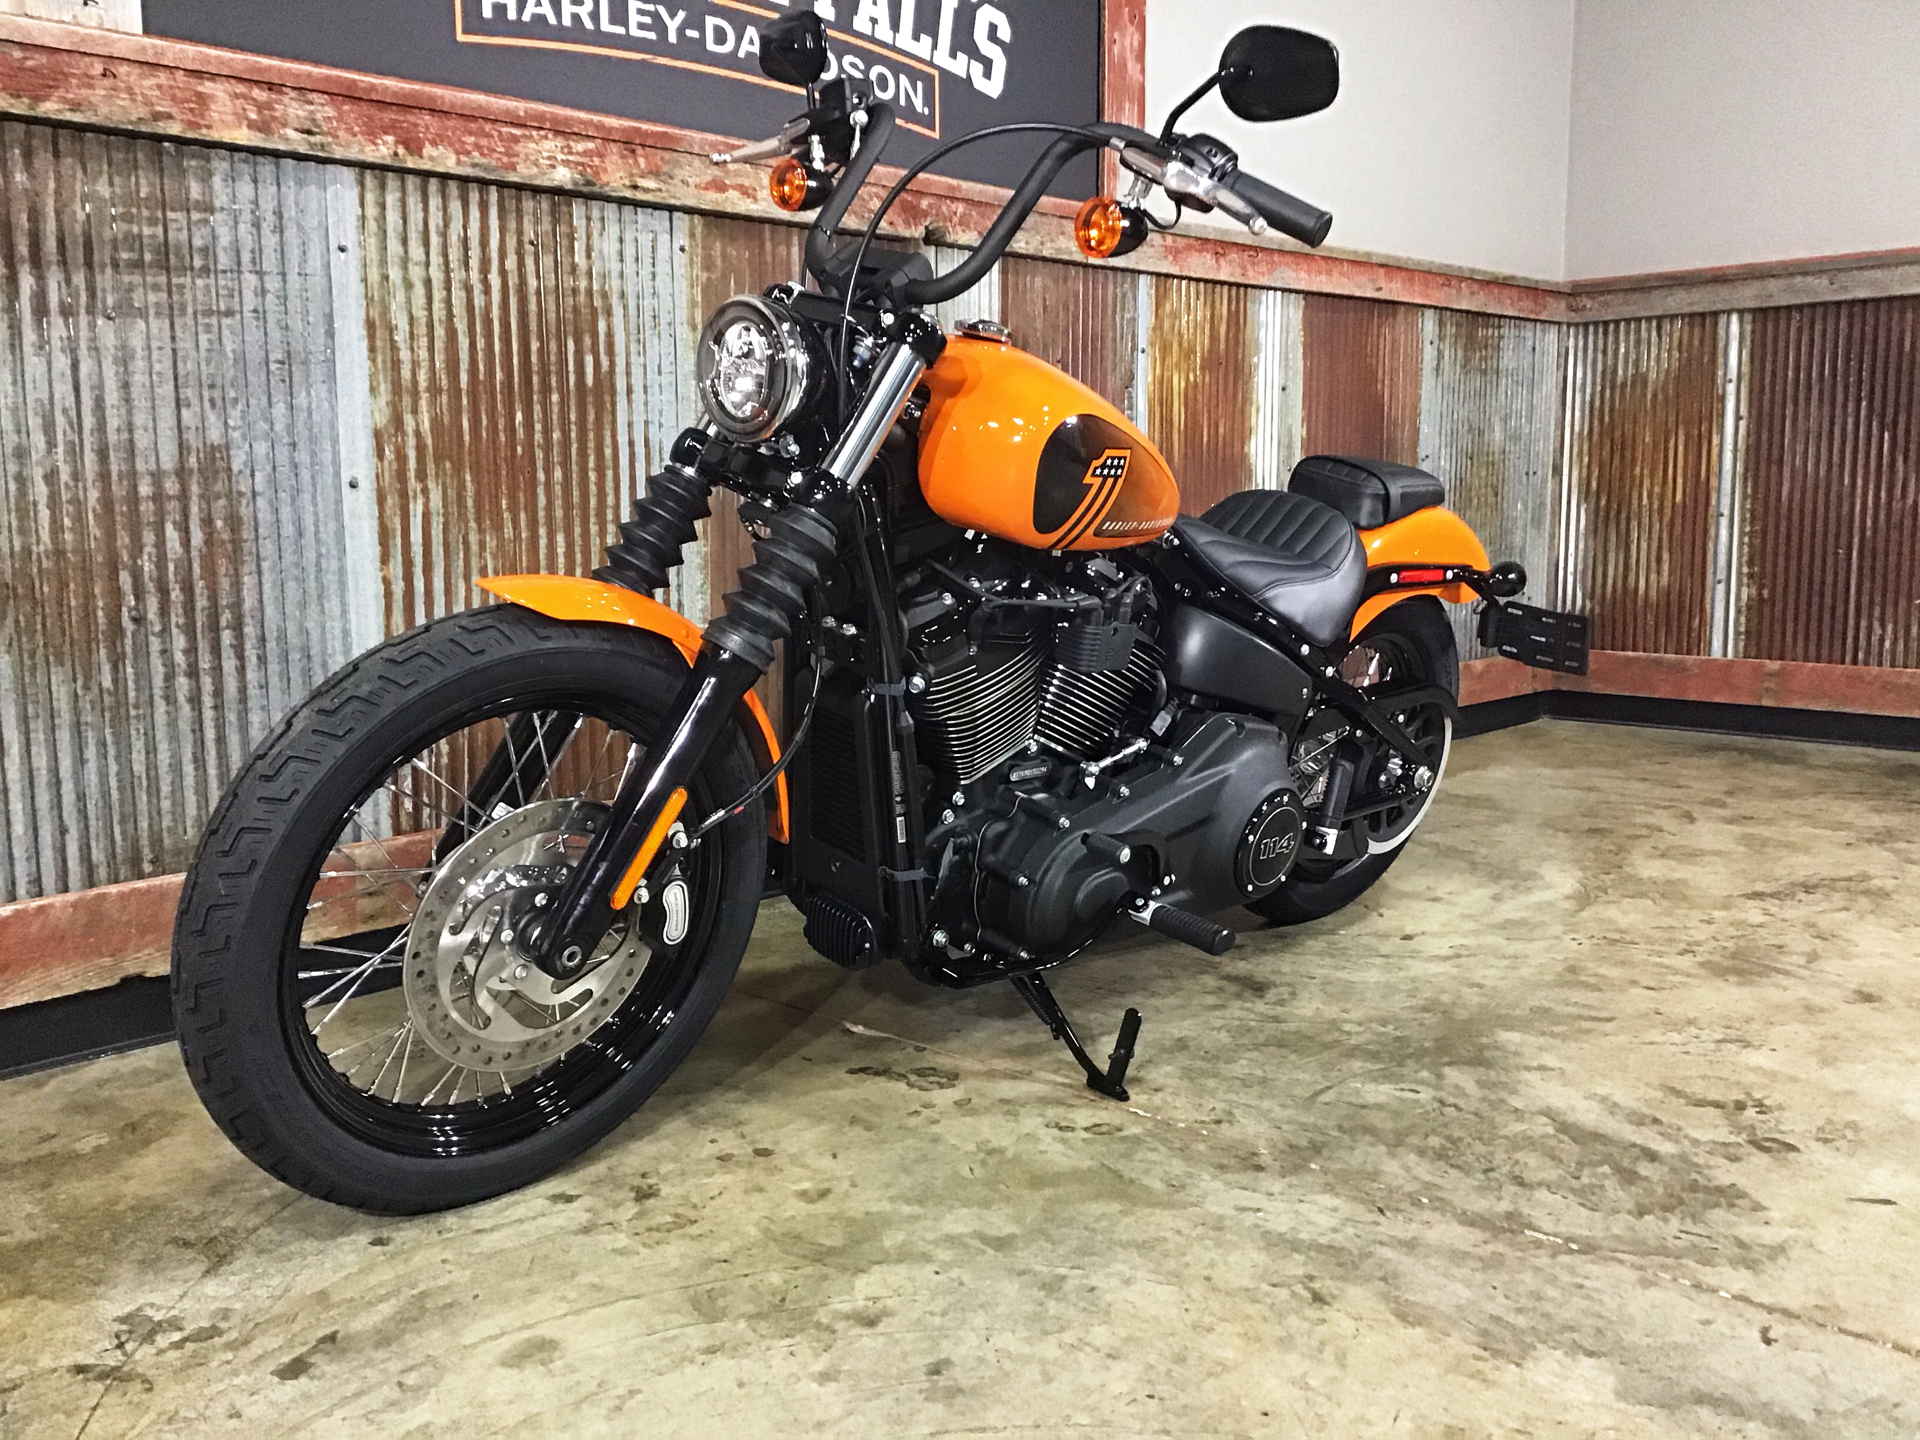 New 2021 Harley Davidson Street Bob 114 Baja Orange Motorcycles In Chippewa Falls Wi Fx015229